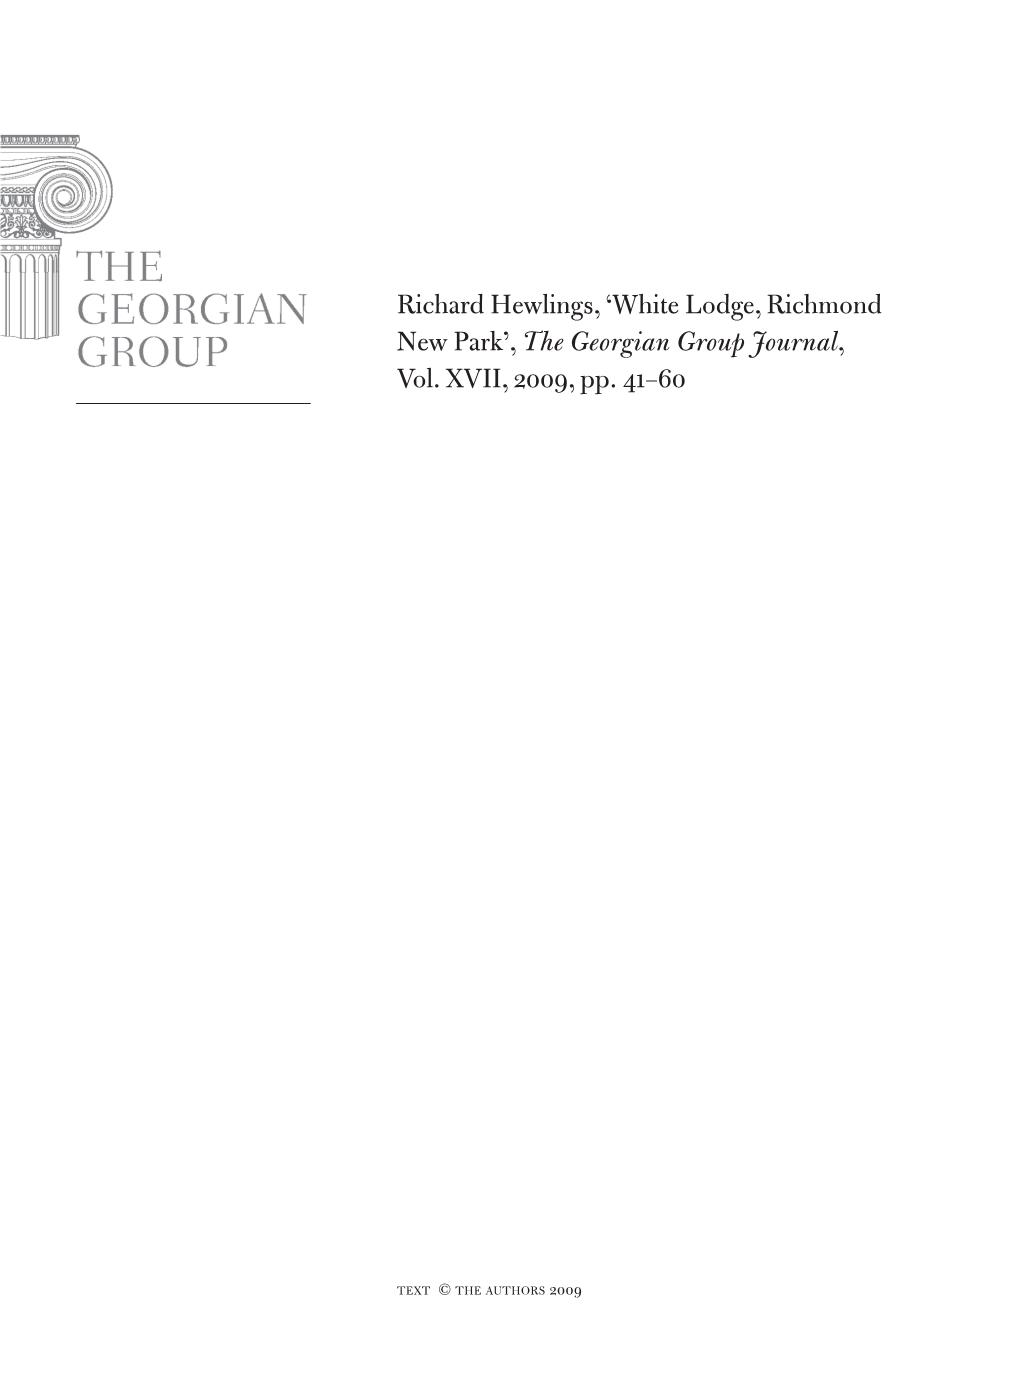 White Lodge, Richmond New Park’, the Georgian Group Journal, Vol